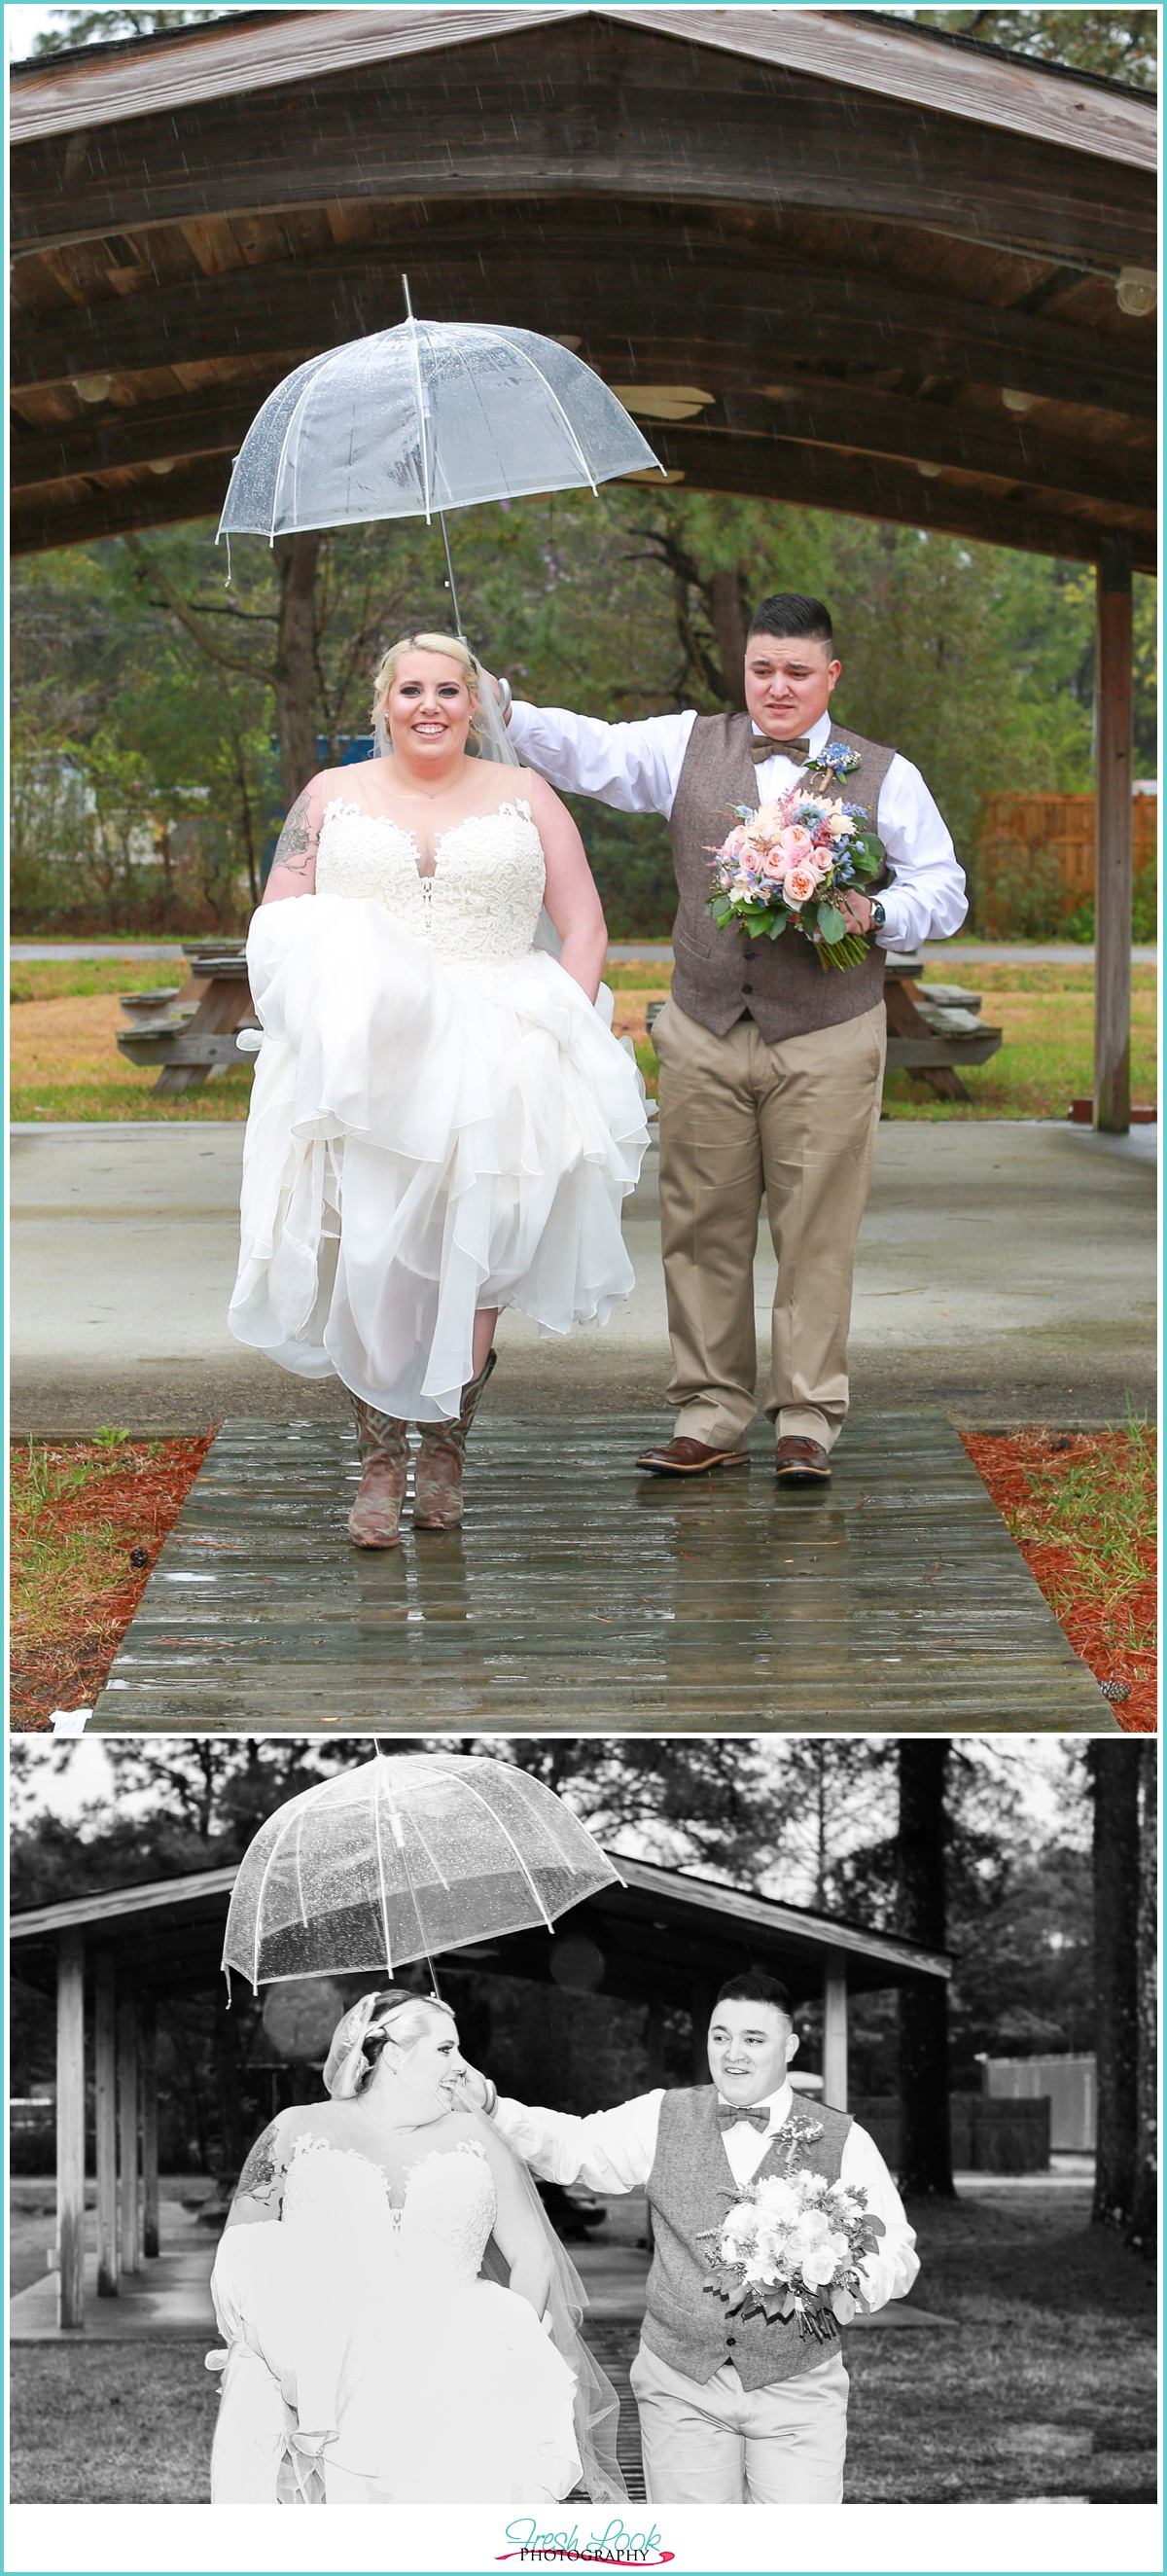 Bride and groom walking in the rain